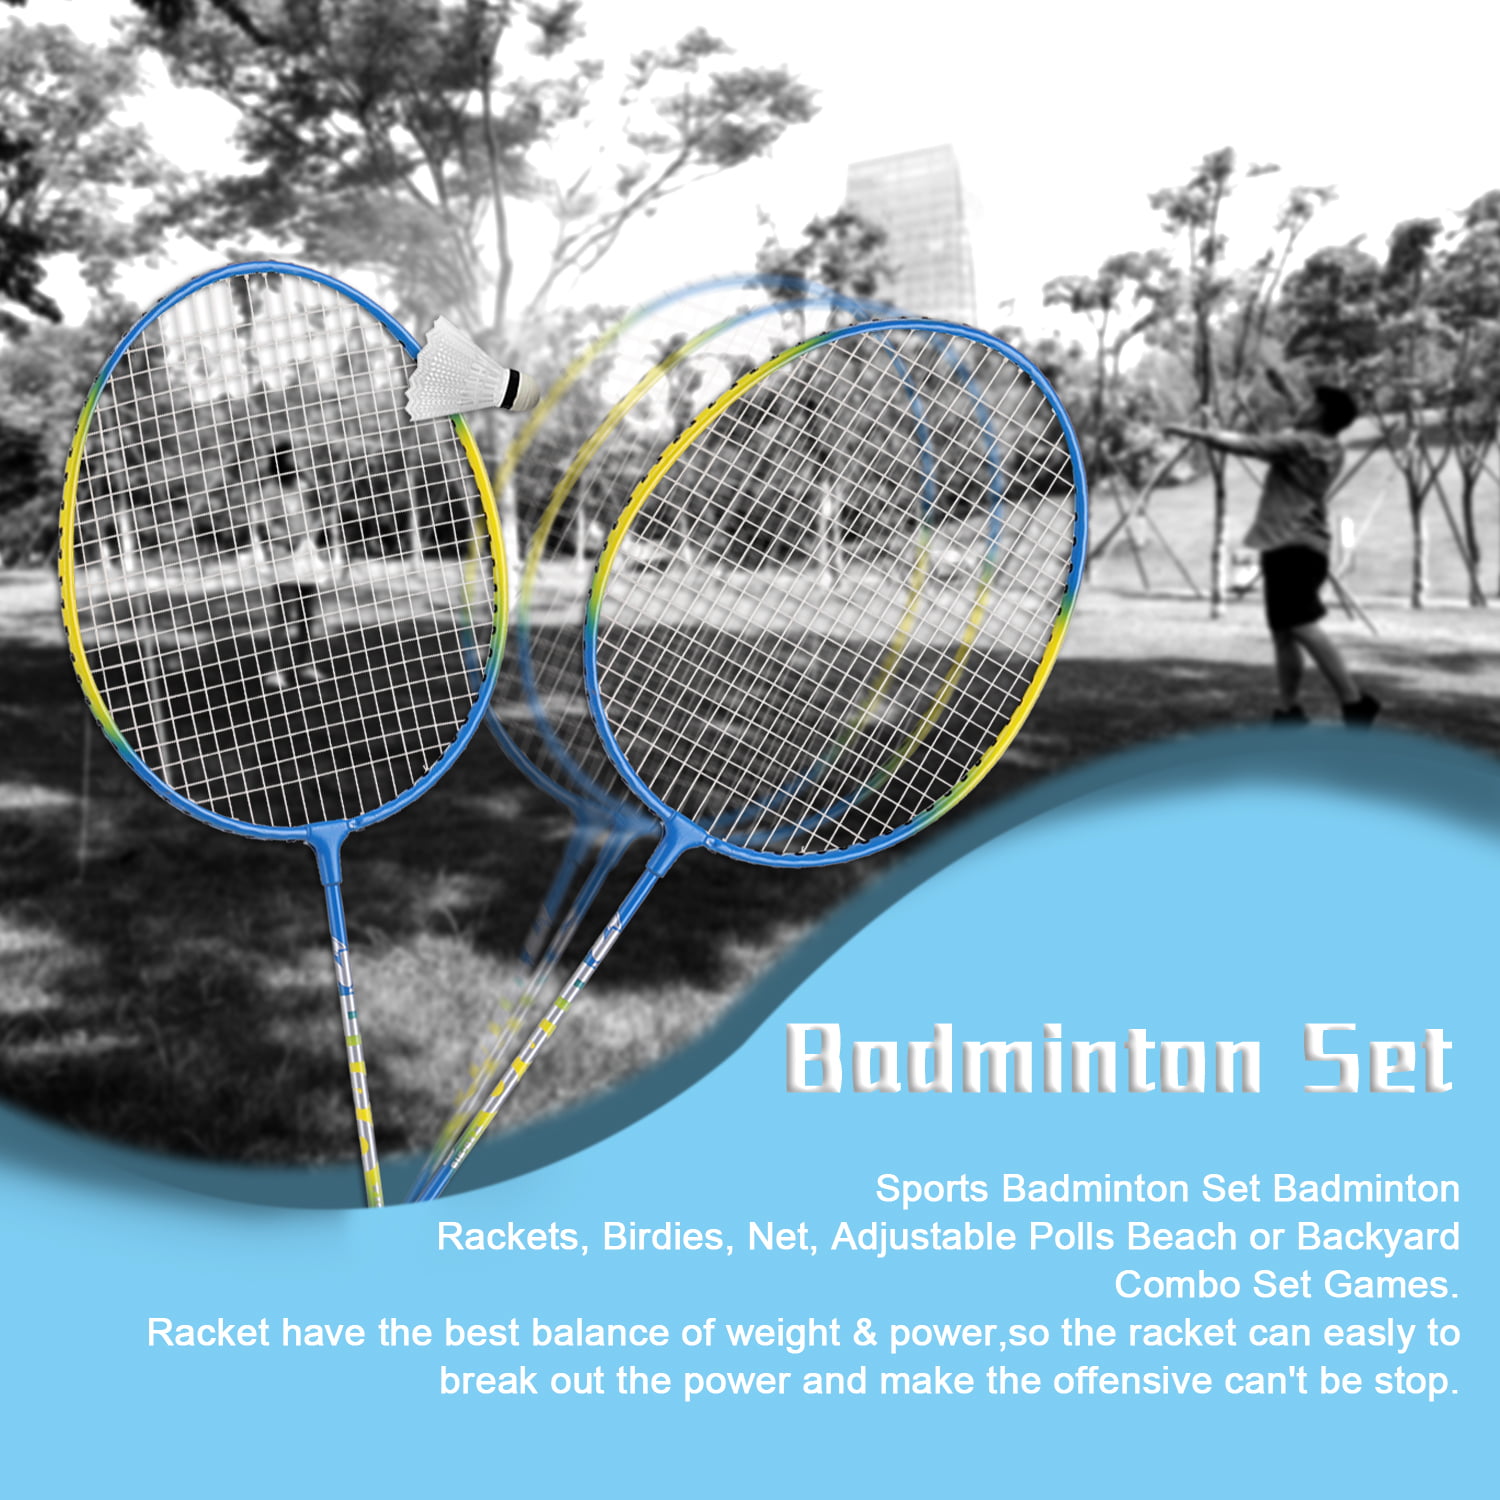 Portable Outdoor Classic Beach or Backyard Combo Set Games and Adjustable Polls Net Badminton Rackets Racquet Sports Sets Badminton Complete Sets Birdies Sports Volleyball and Badminton Set 